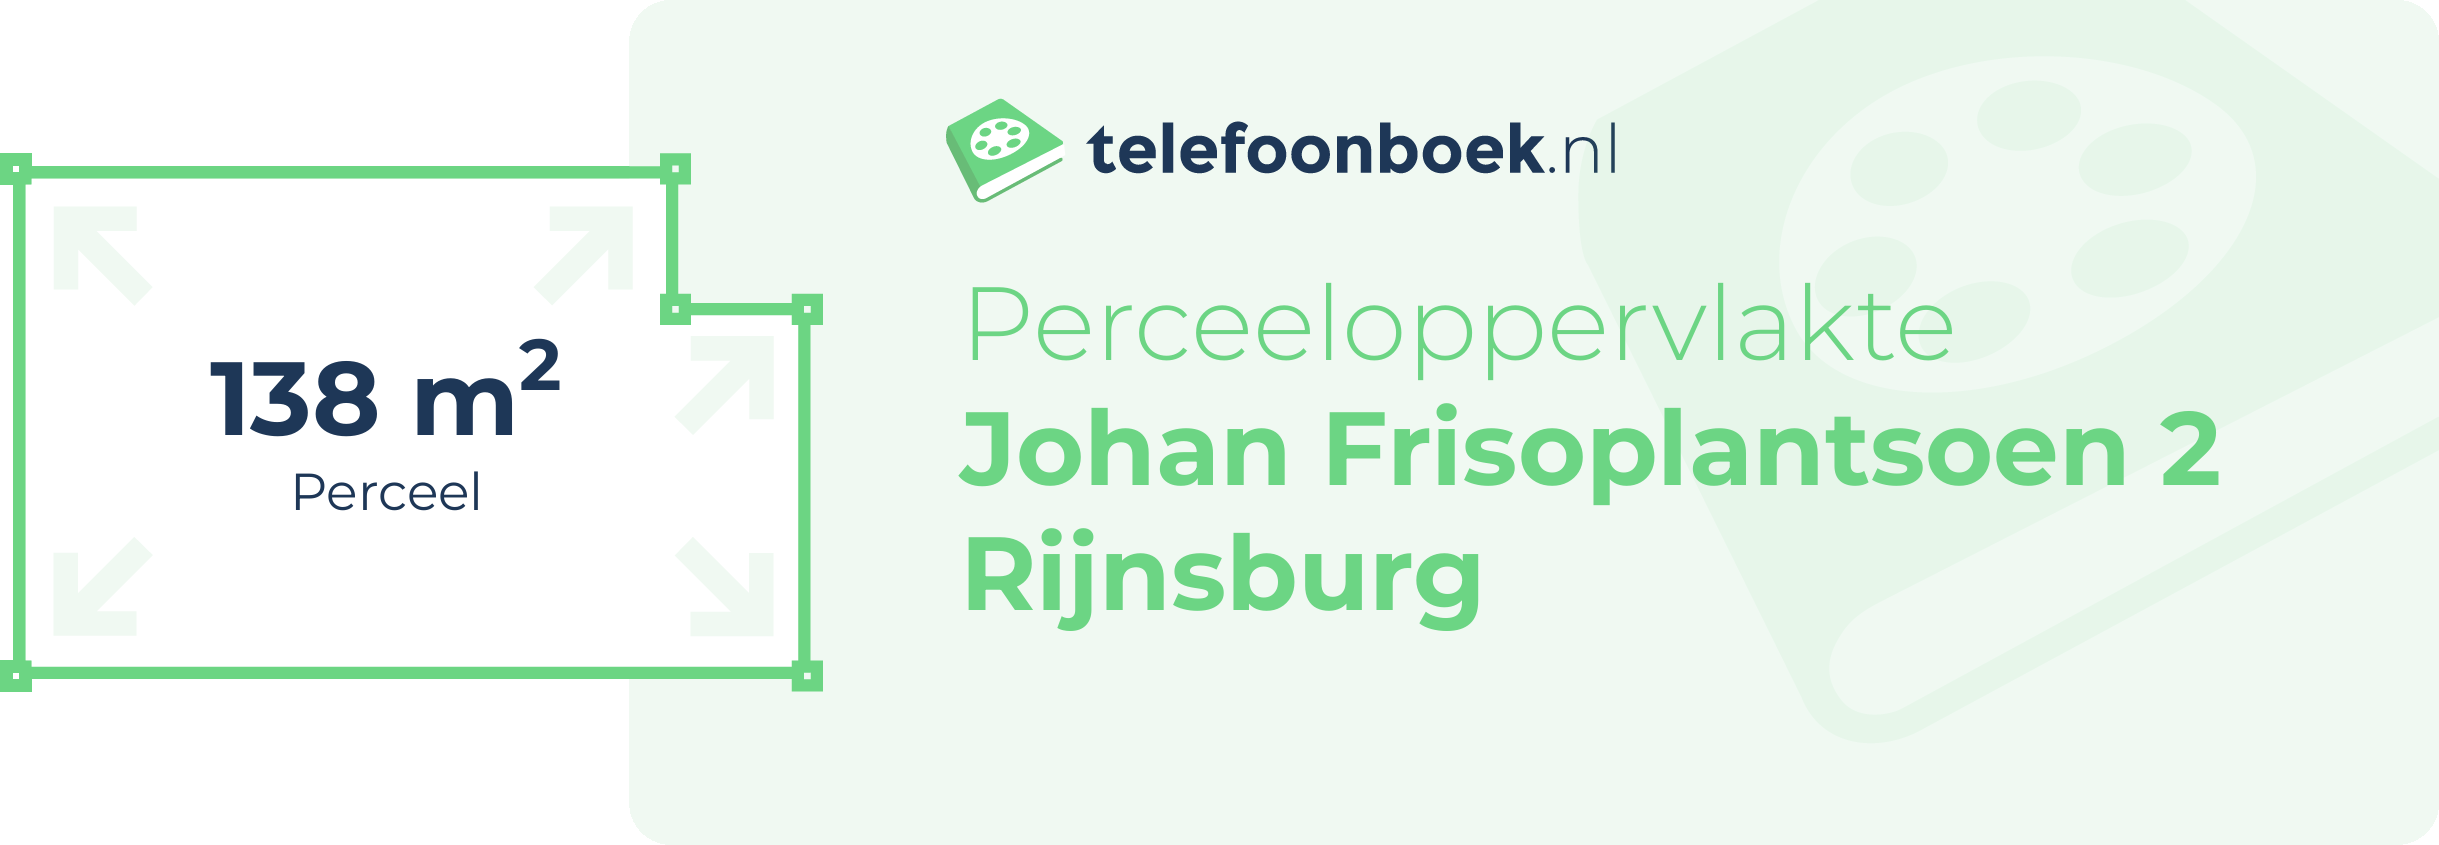 Perceeloppervlakte Johan Frisoplantsoen 2 Rijnsburg